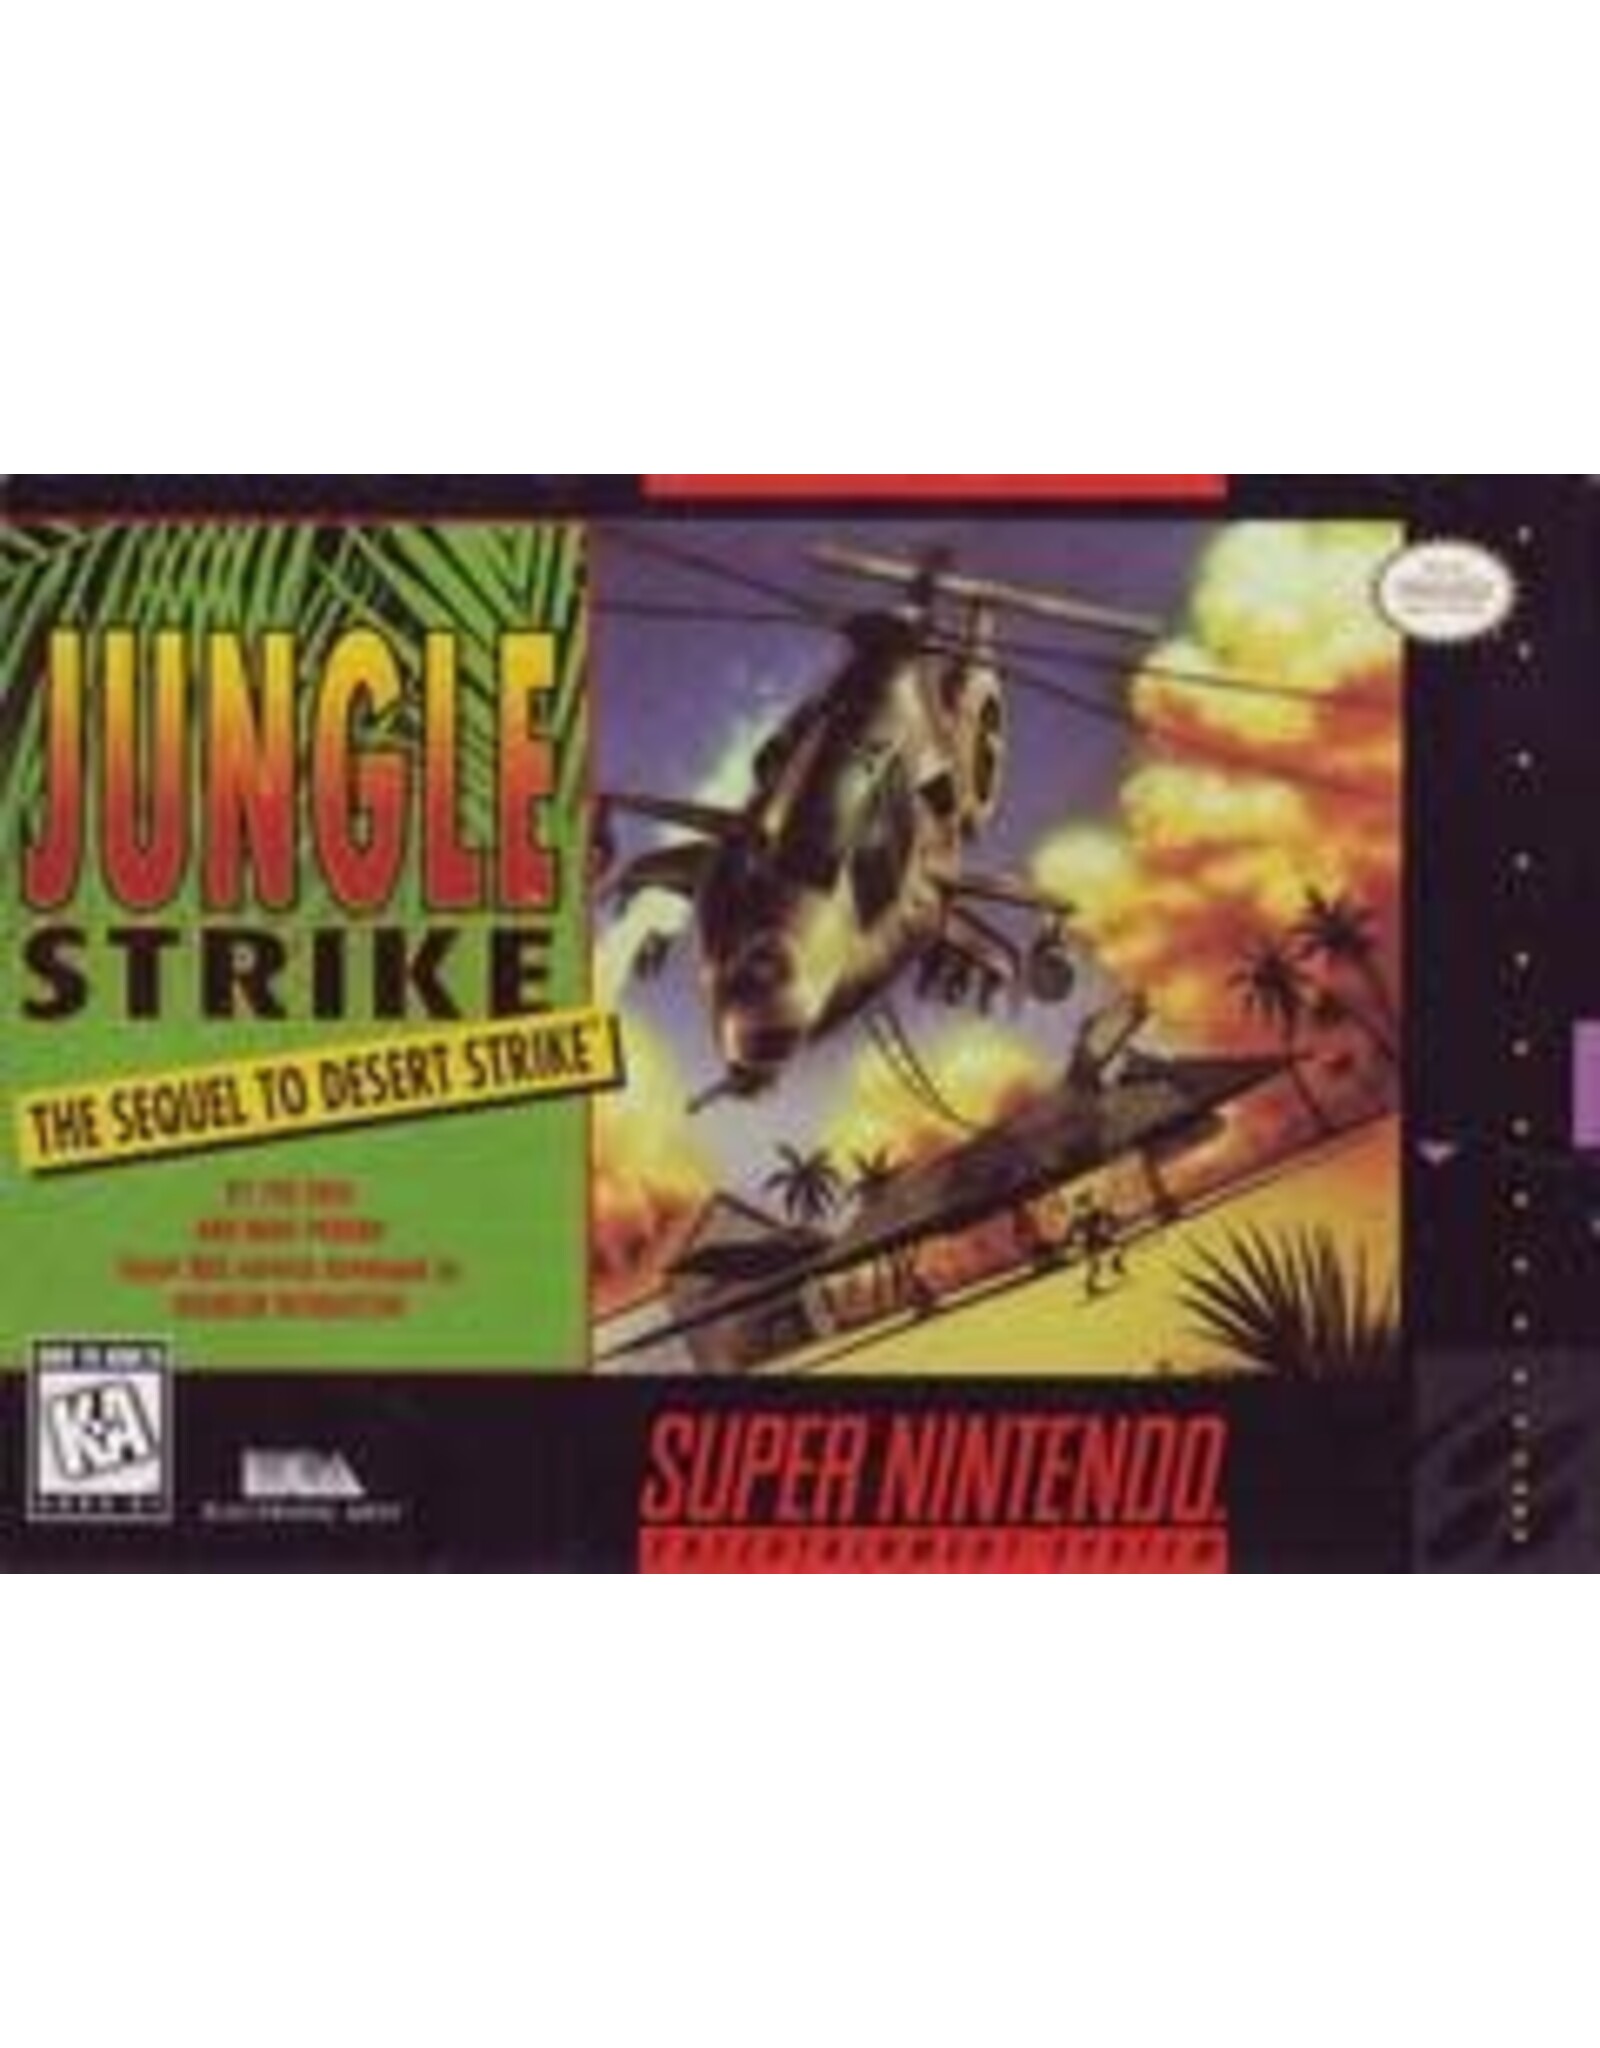 Super Nintendo Jungle Strike (Boxed, No Manual, Lightly Damaged Box)